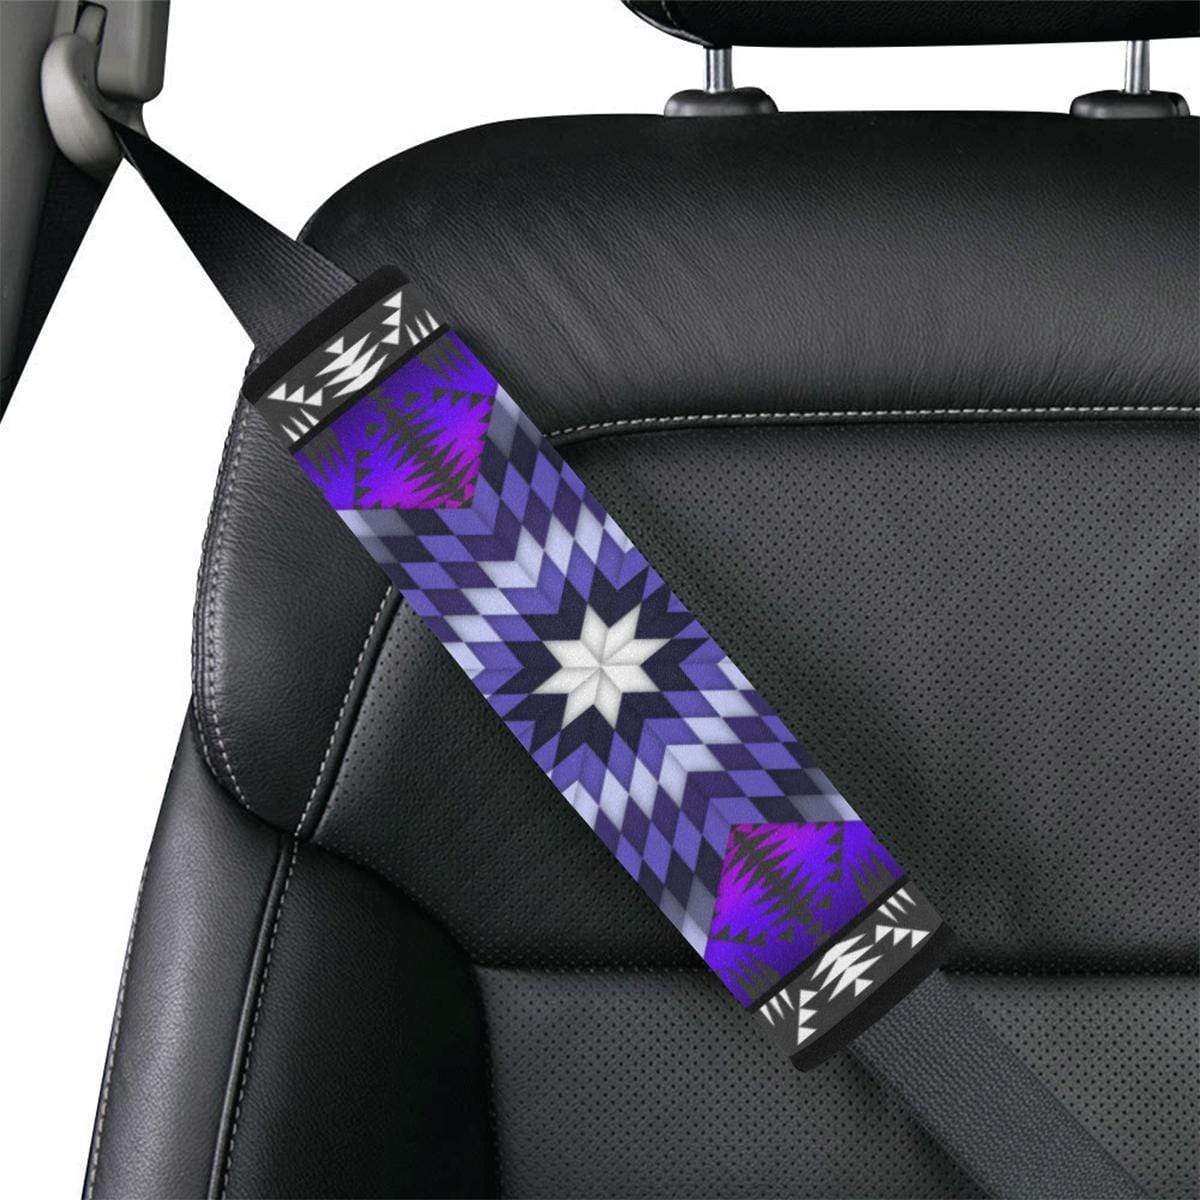 Purple Star Car Seat Belt Cover 7''x12.6'' Car Seat Belt Cover 7''x12.6'' e-joyer 